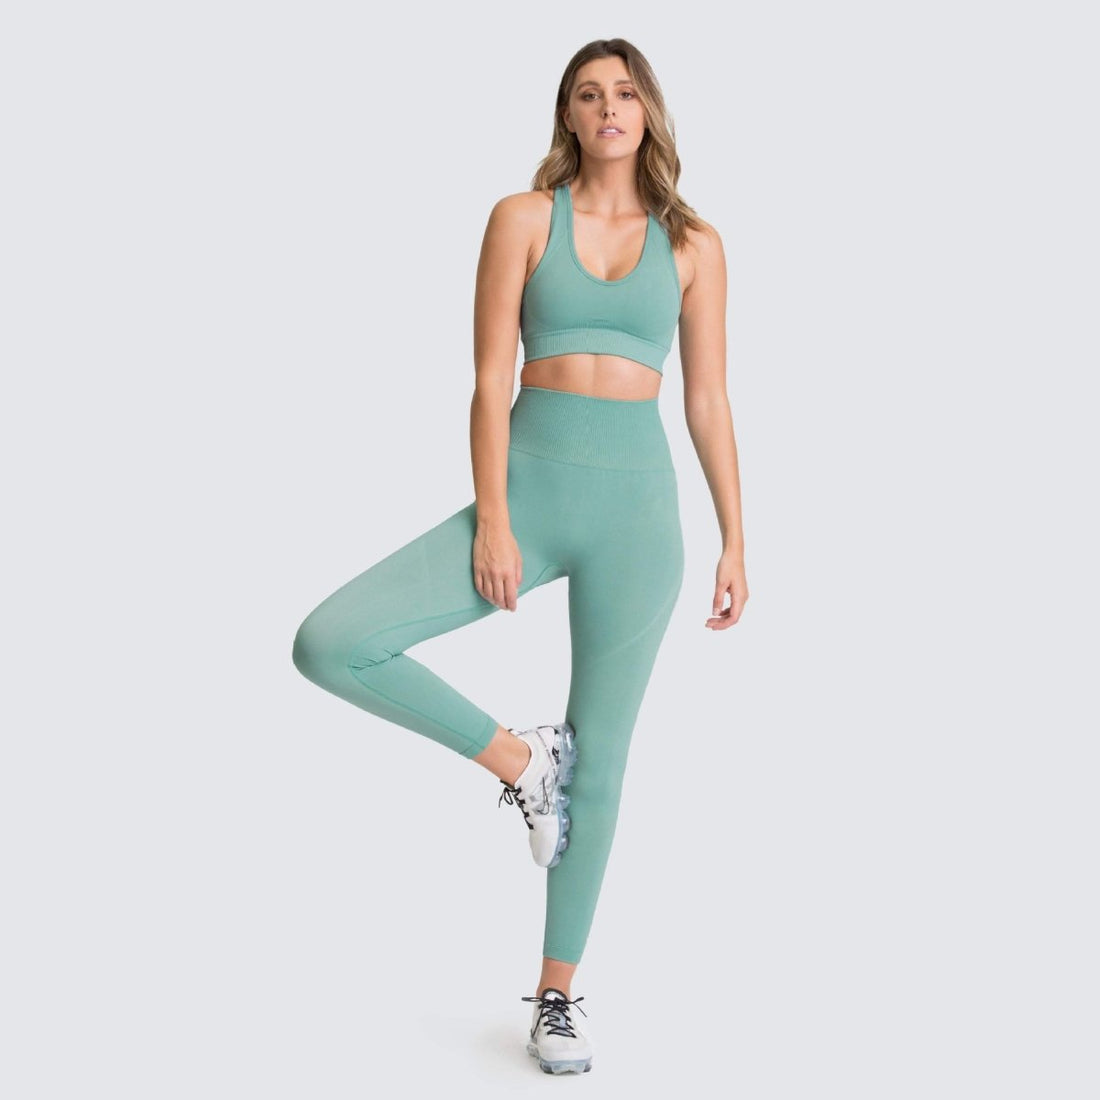 New Ladies Seamless Clothes Sportswear Set for Women Workout Yoga